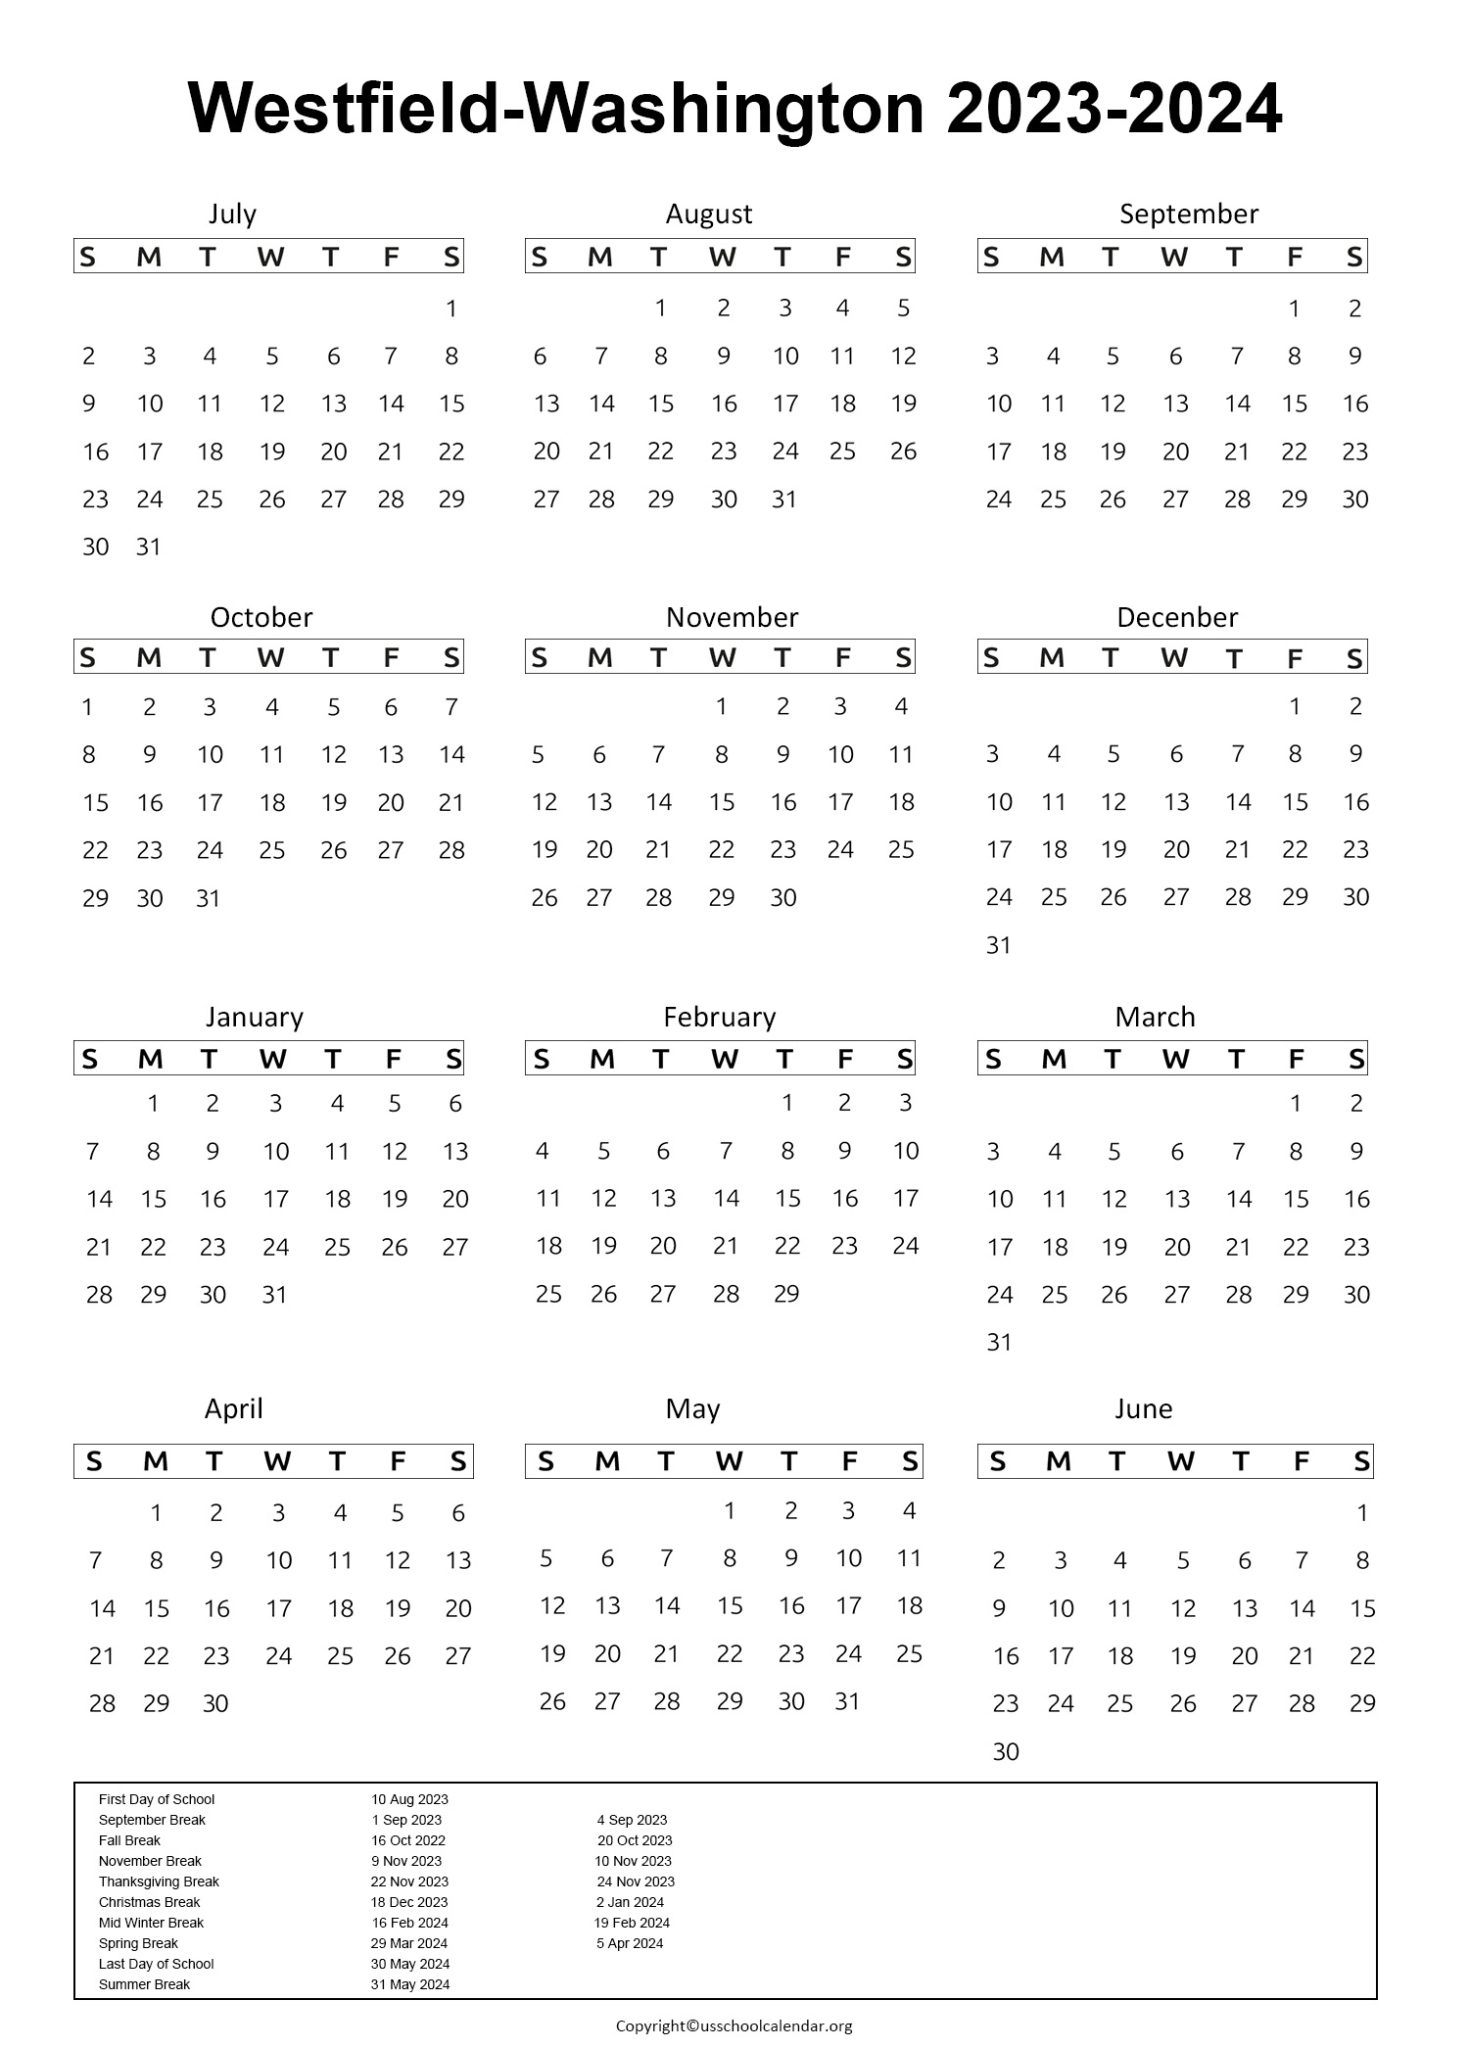 Westfield Washington Schools Calendar with Holidays 2023 2024